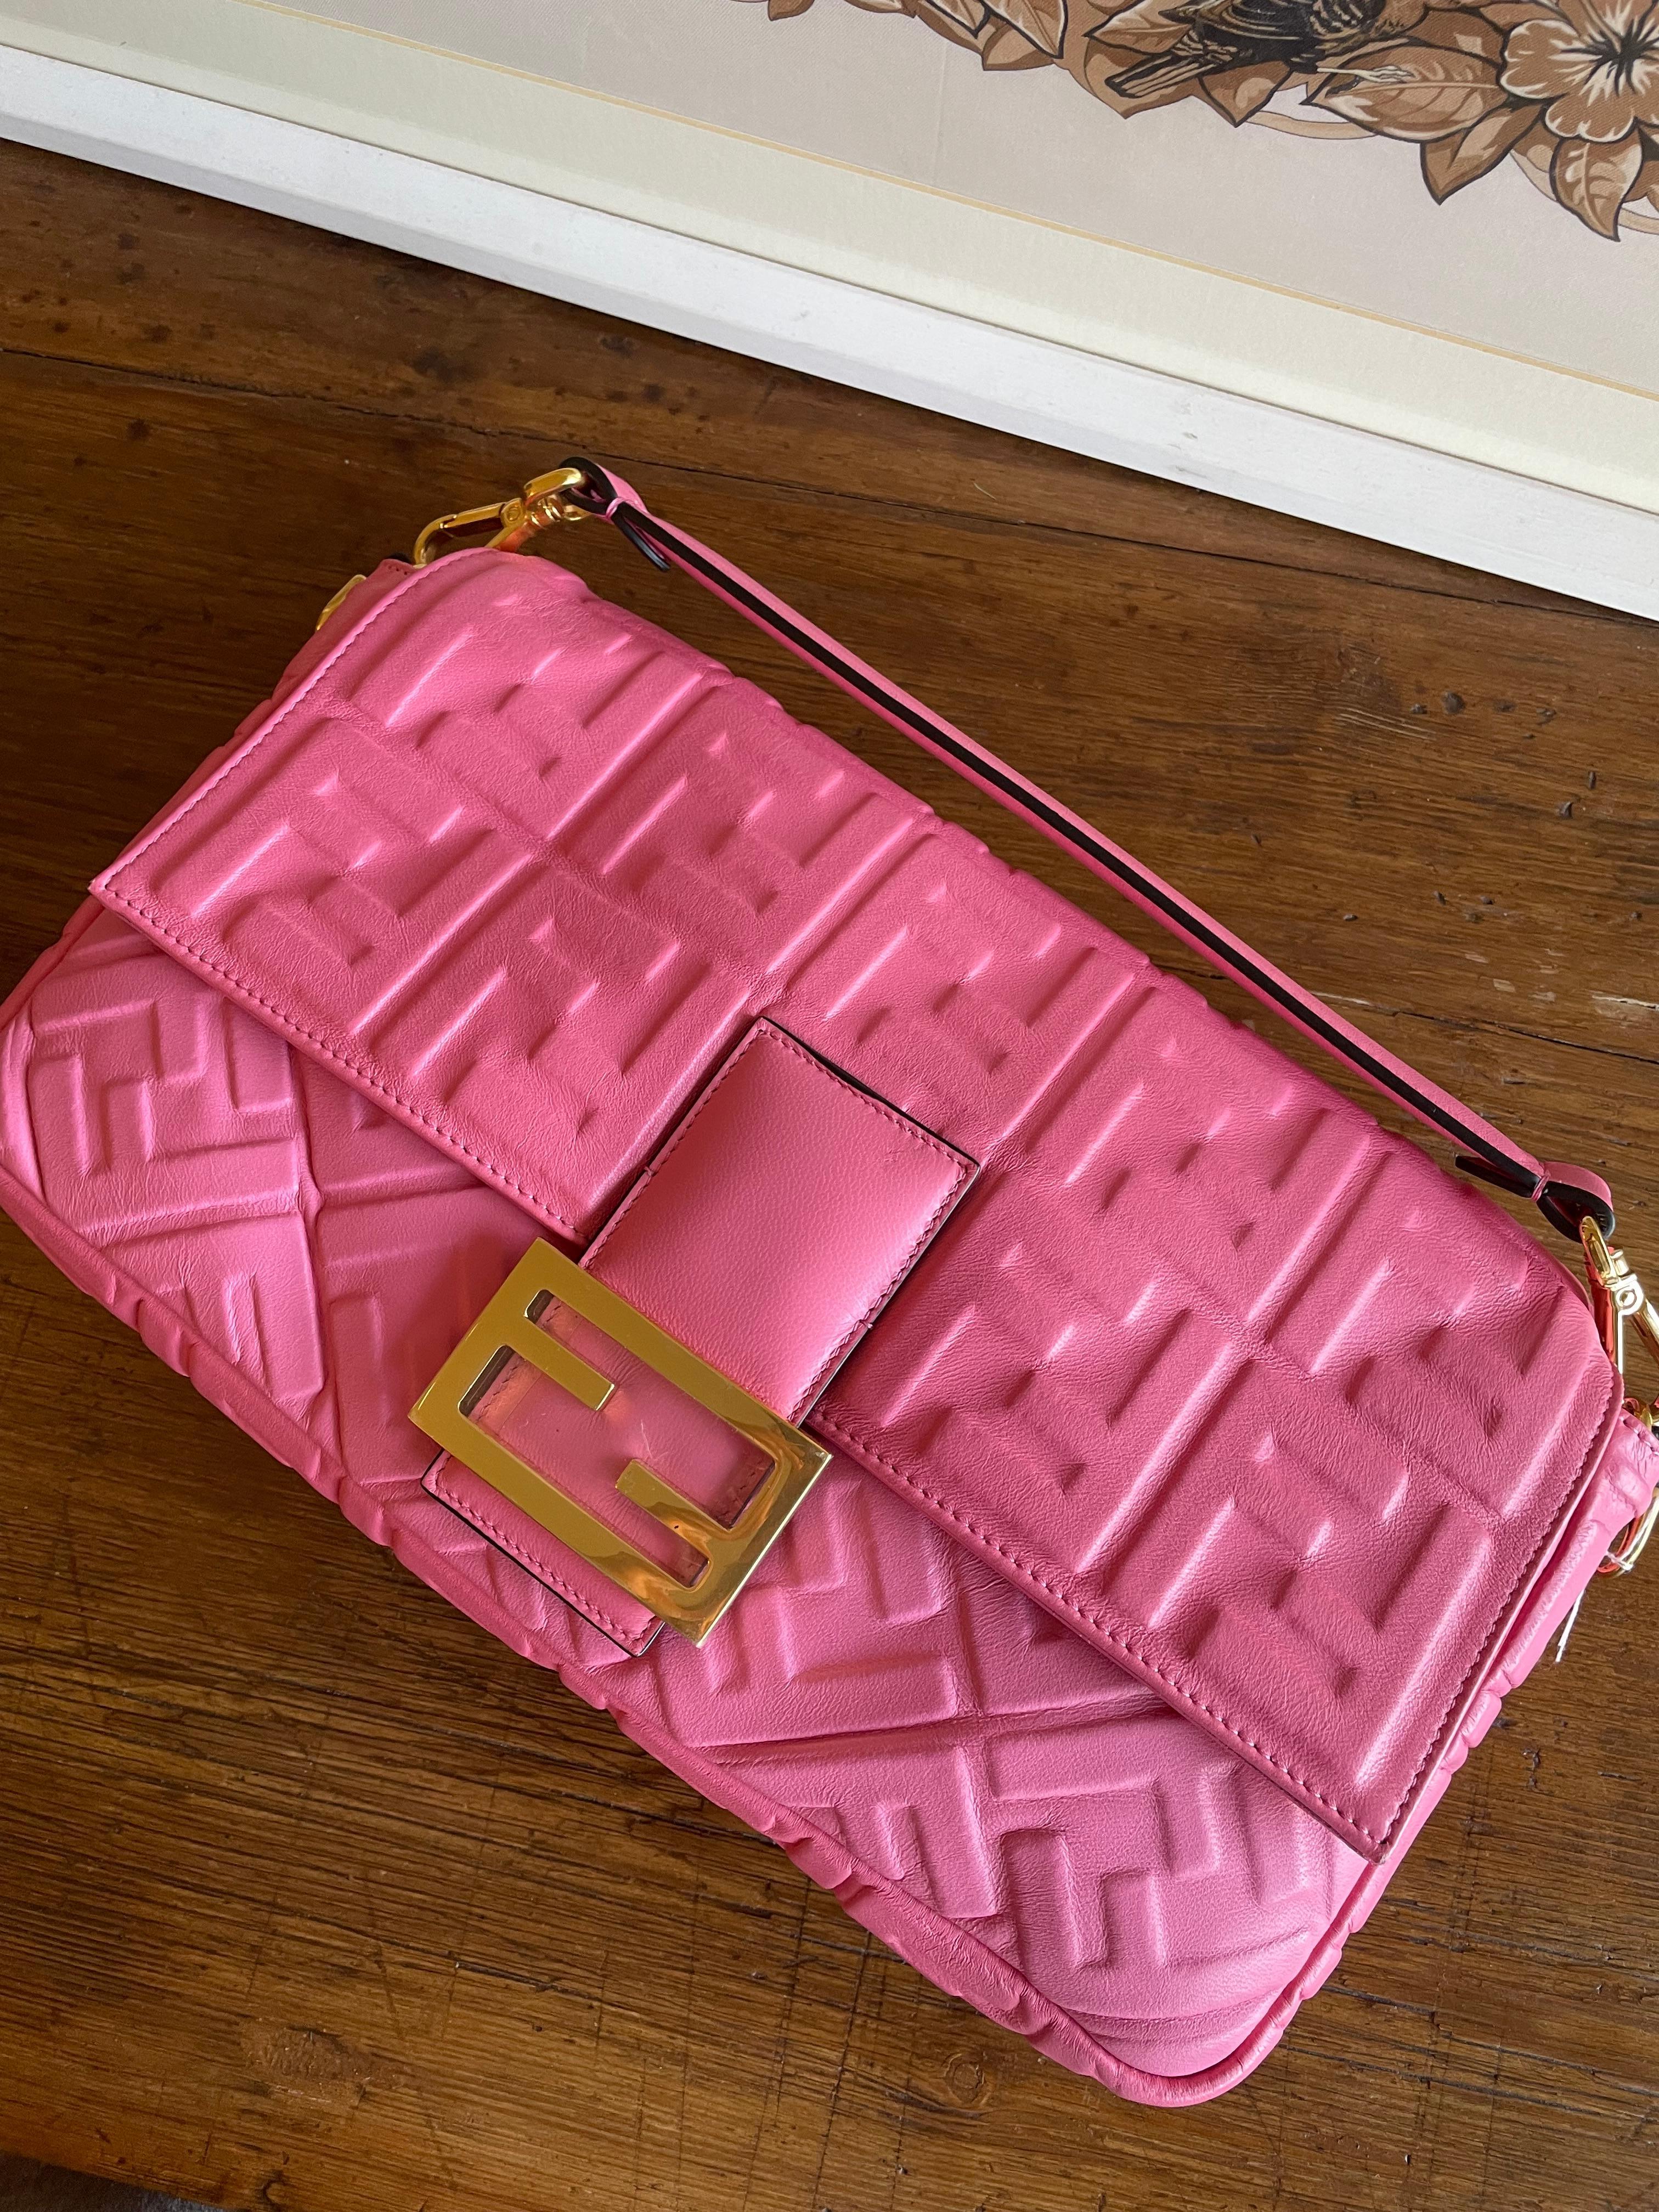 Women's or Men's New Fendi baguette bag in pink nappa leather.